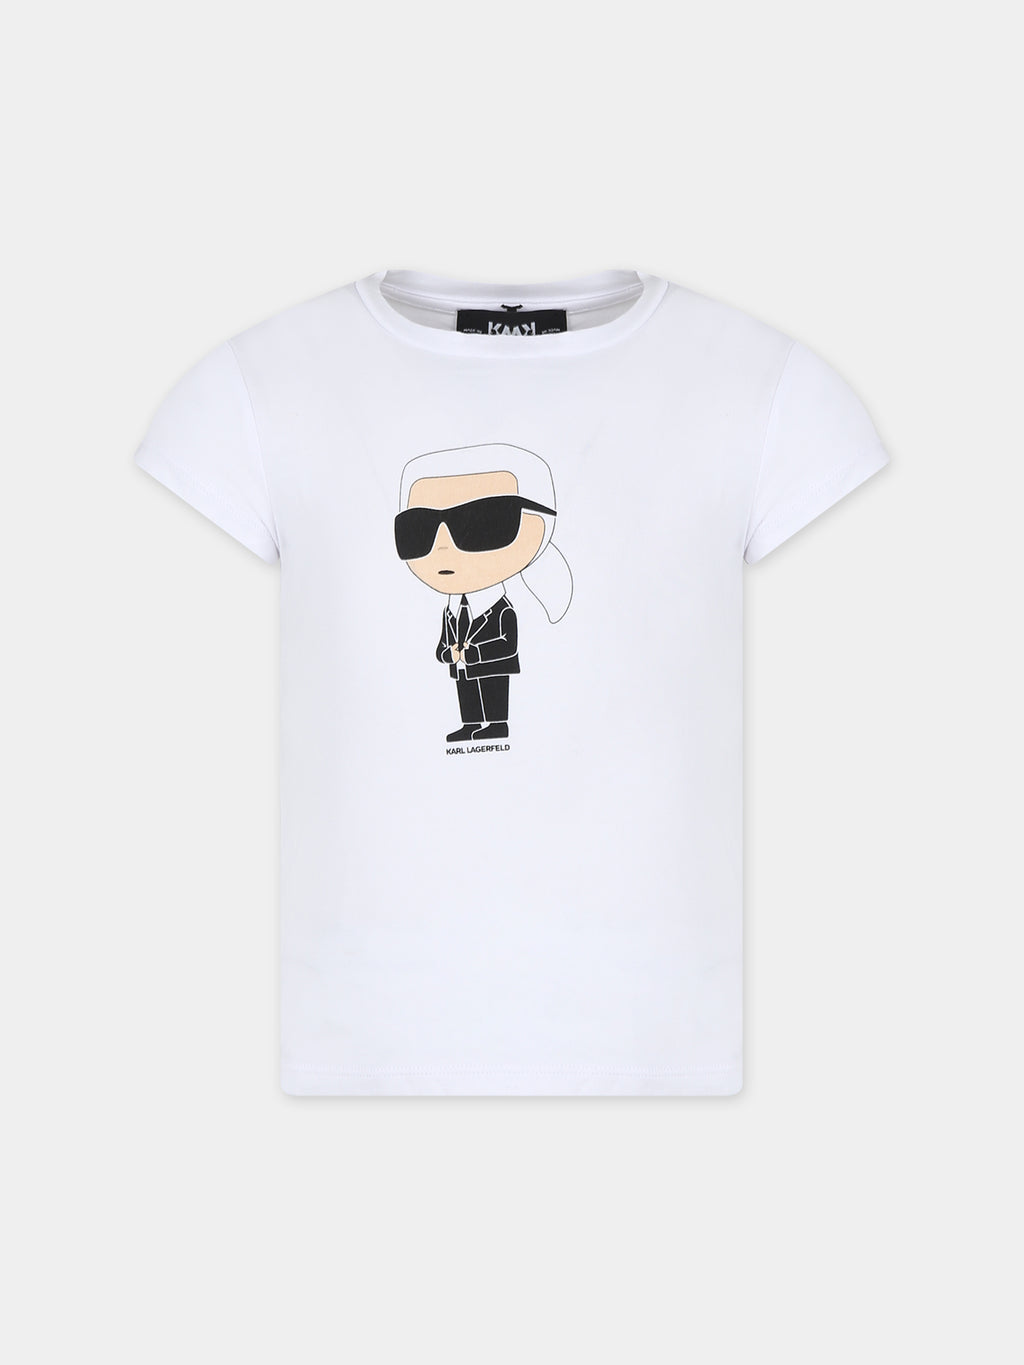 T-shirt bianca per bambina con stampa Karl Lagerfeld e logo